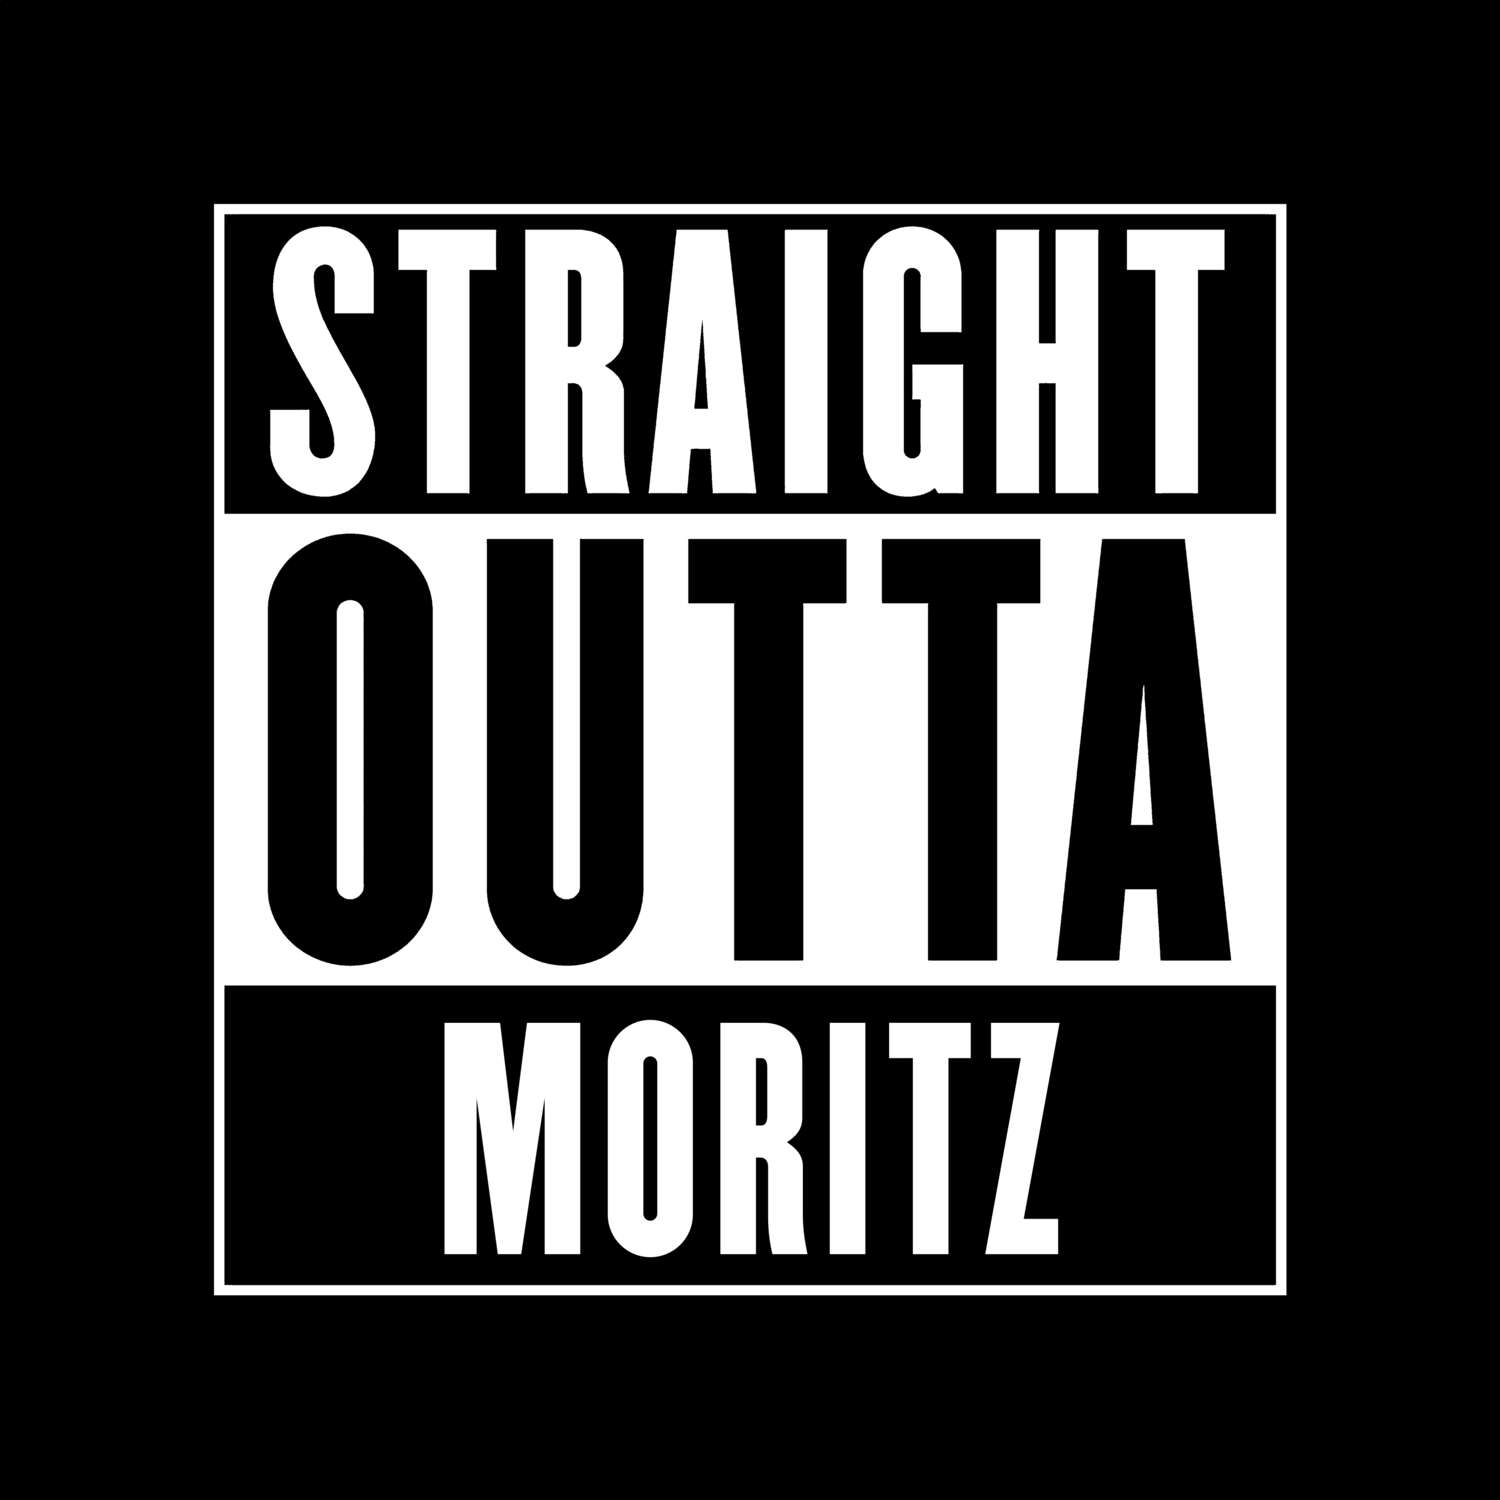 Moritz T-Shirt »Straight Outta«